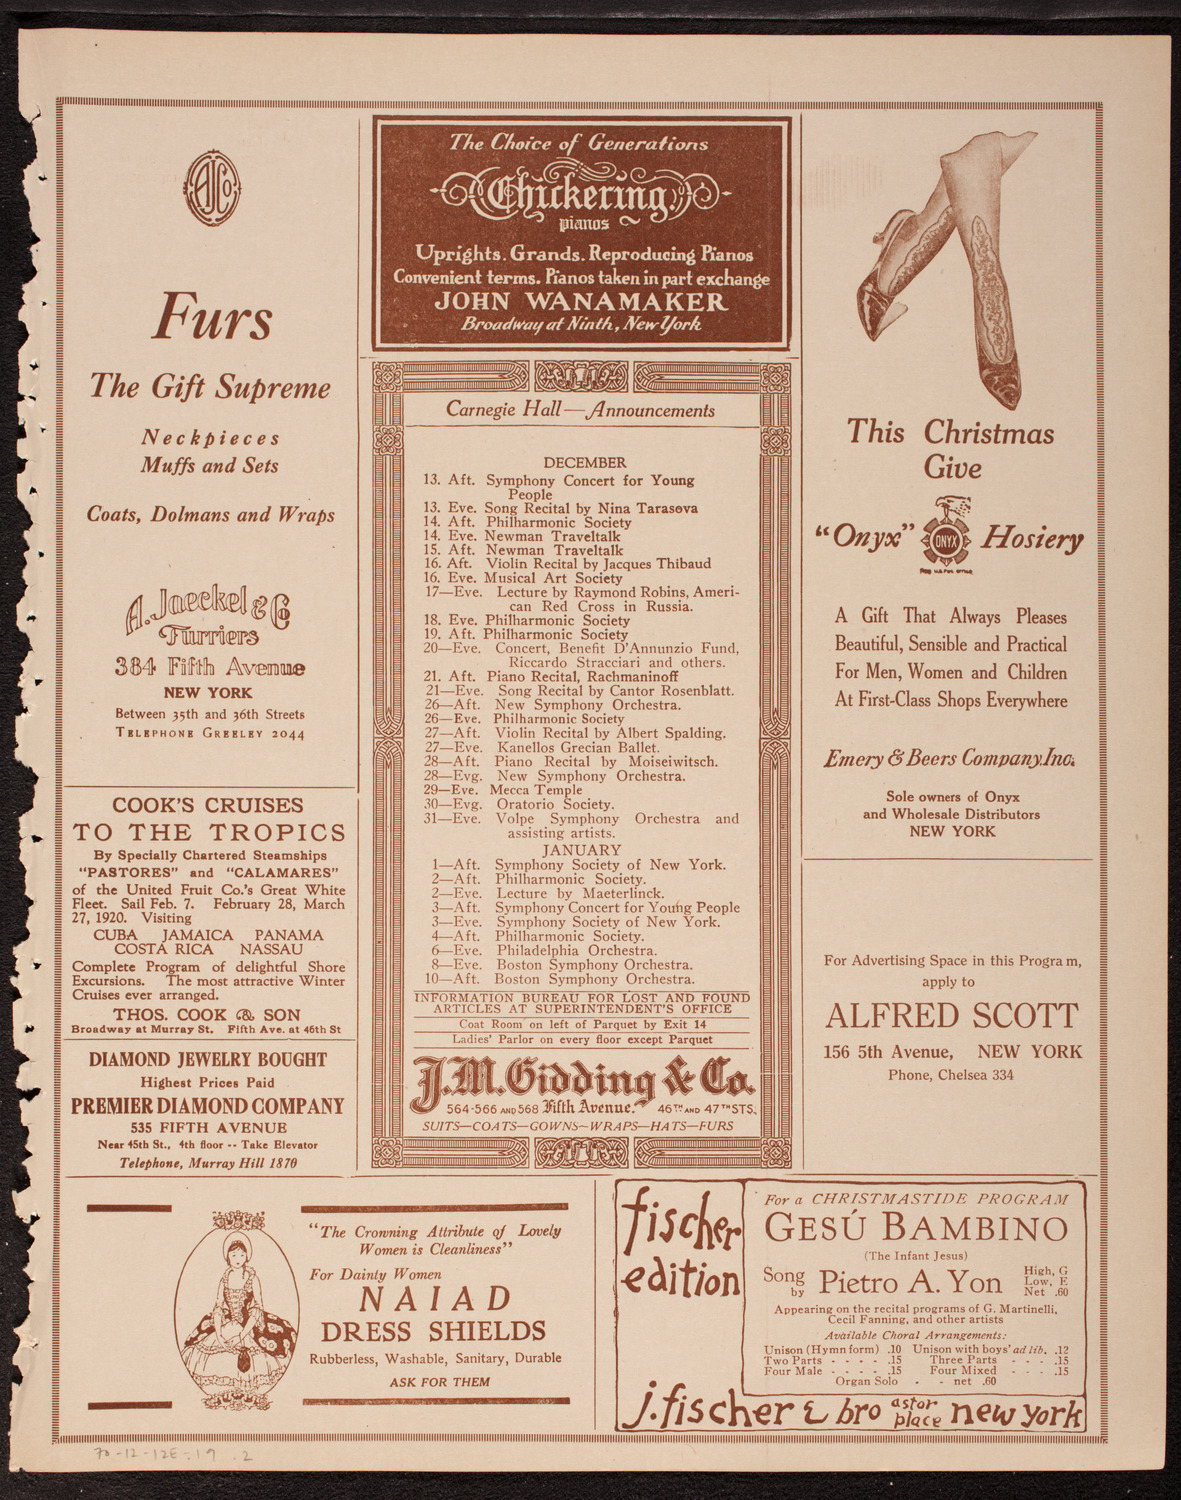 Clef Club Memorial Fund Concert in honor of James Reese Europe, December 12, 1919, program page 3